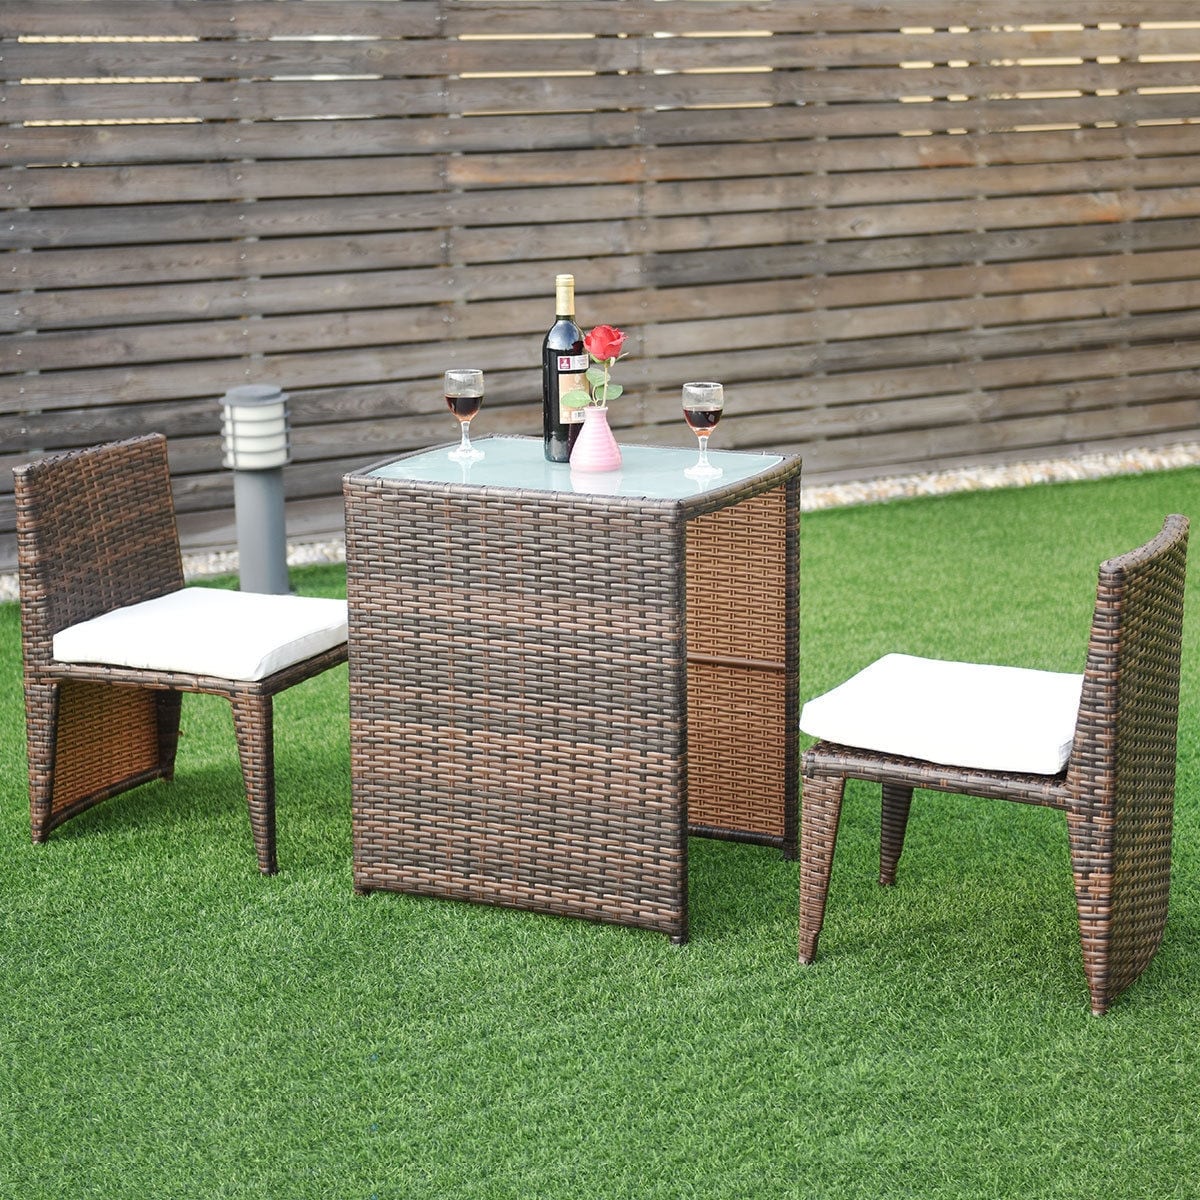 3 PCS Brown Cushioned Outdoor Wicker Patio Set Garden Lawn Sofa Furniture Seat